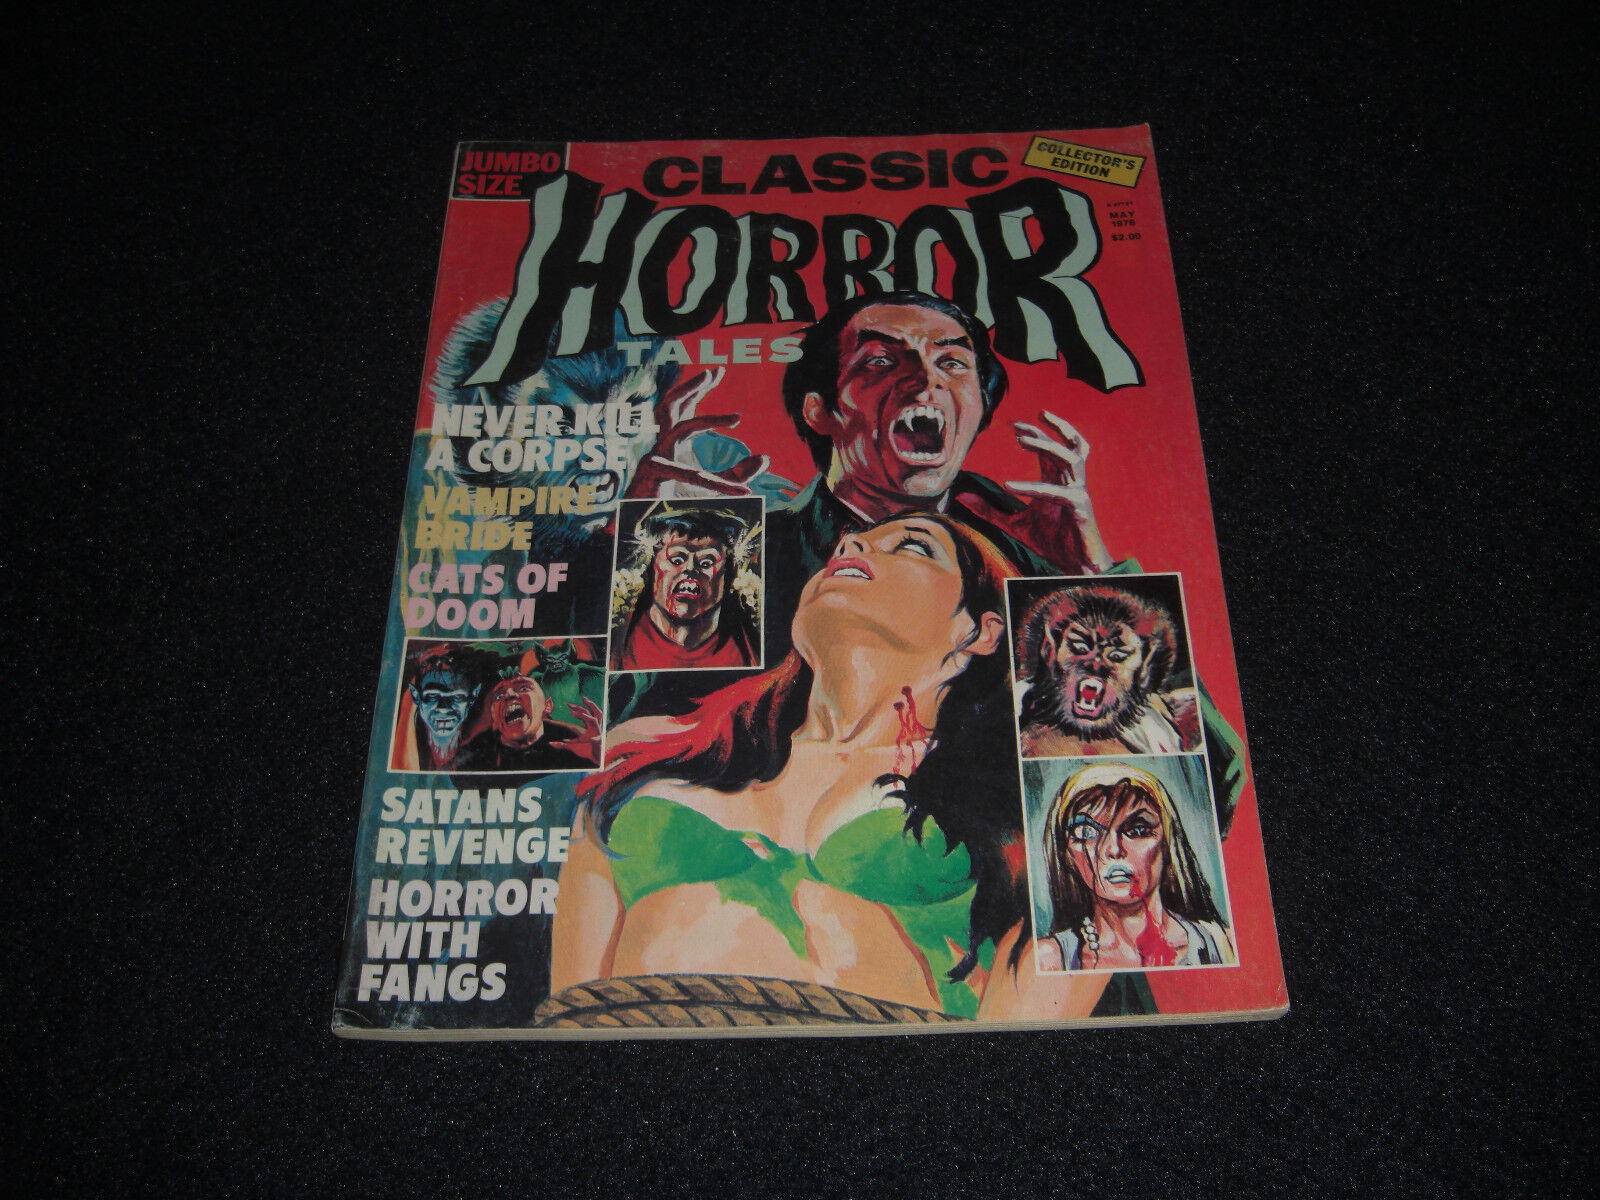  Classic Horror Tales Eerie Publications Jumbo Magazine May 1976 V7 N2